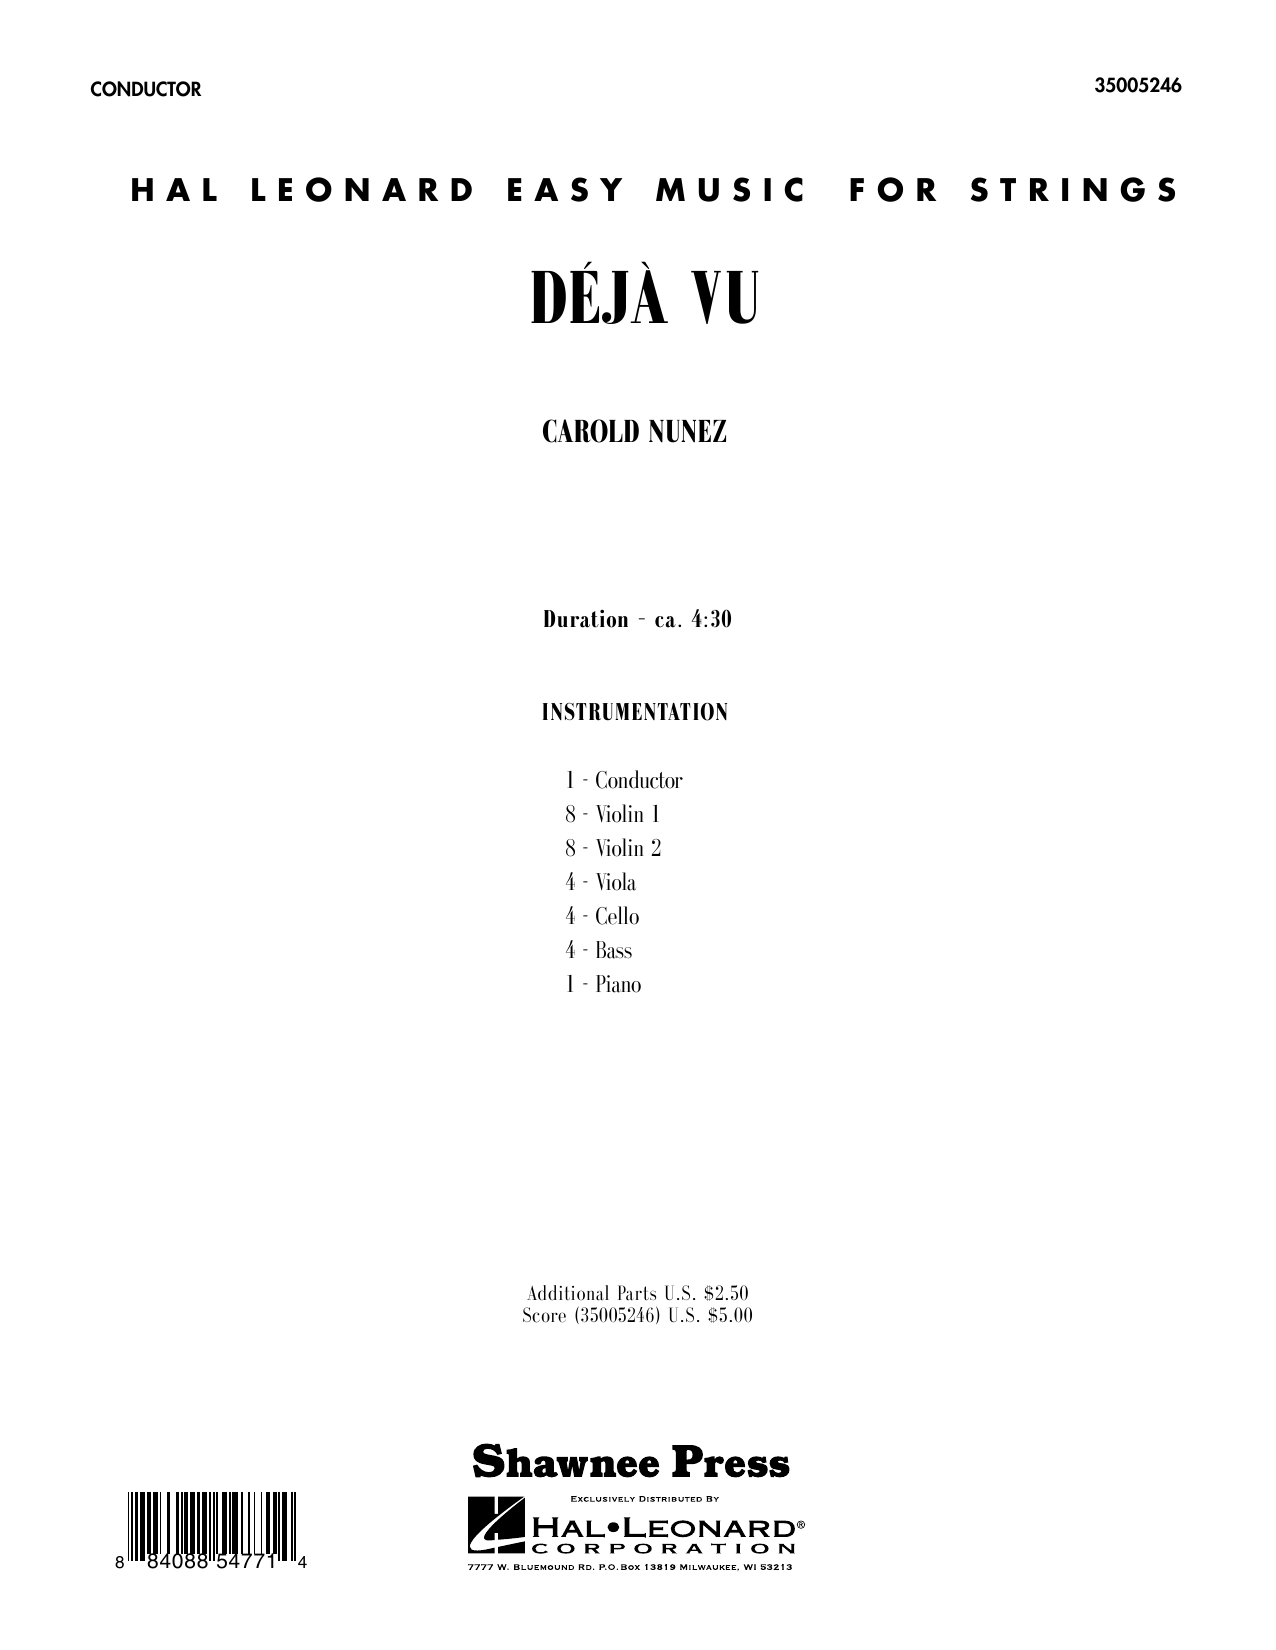 Carold Nunez Deja Vu - Full Score sheet music notes and chords arranged for Orchestra